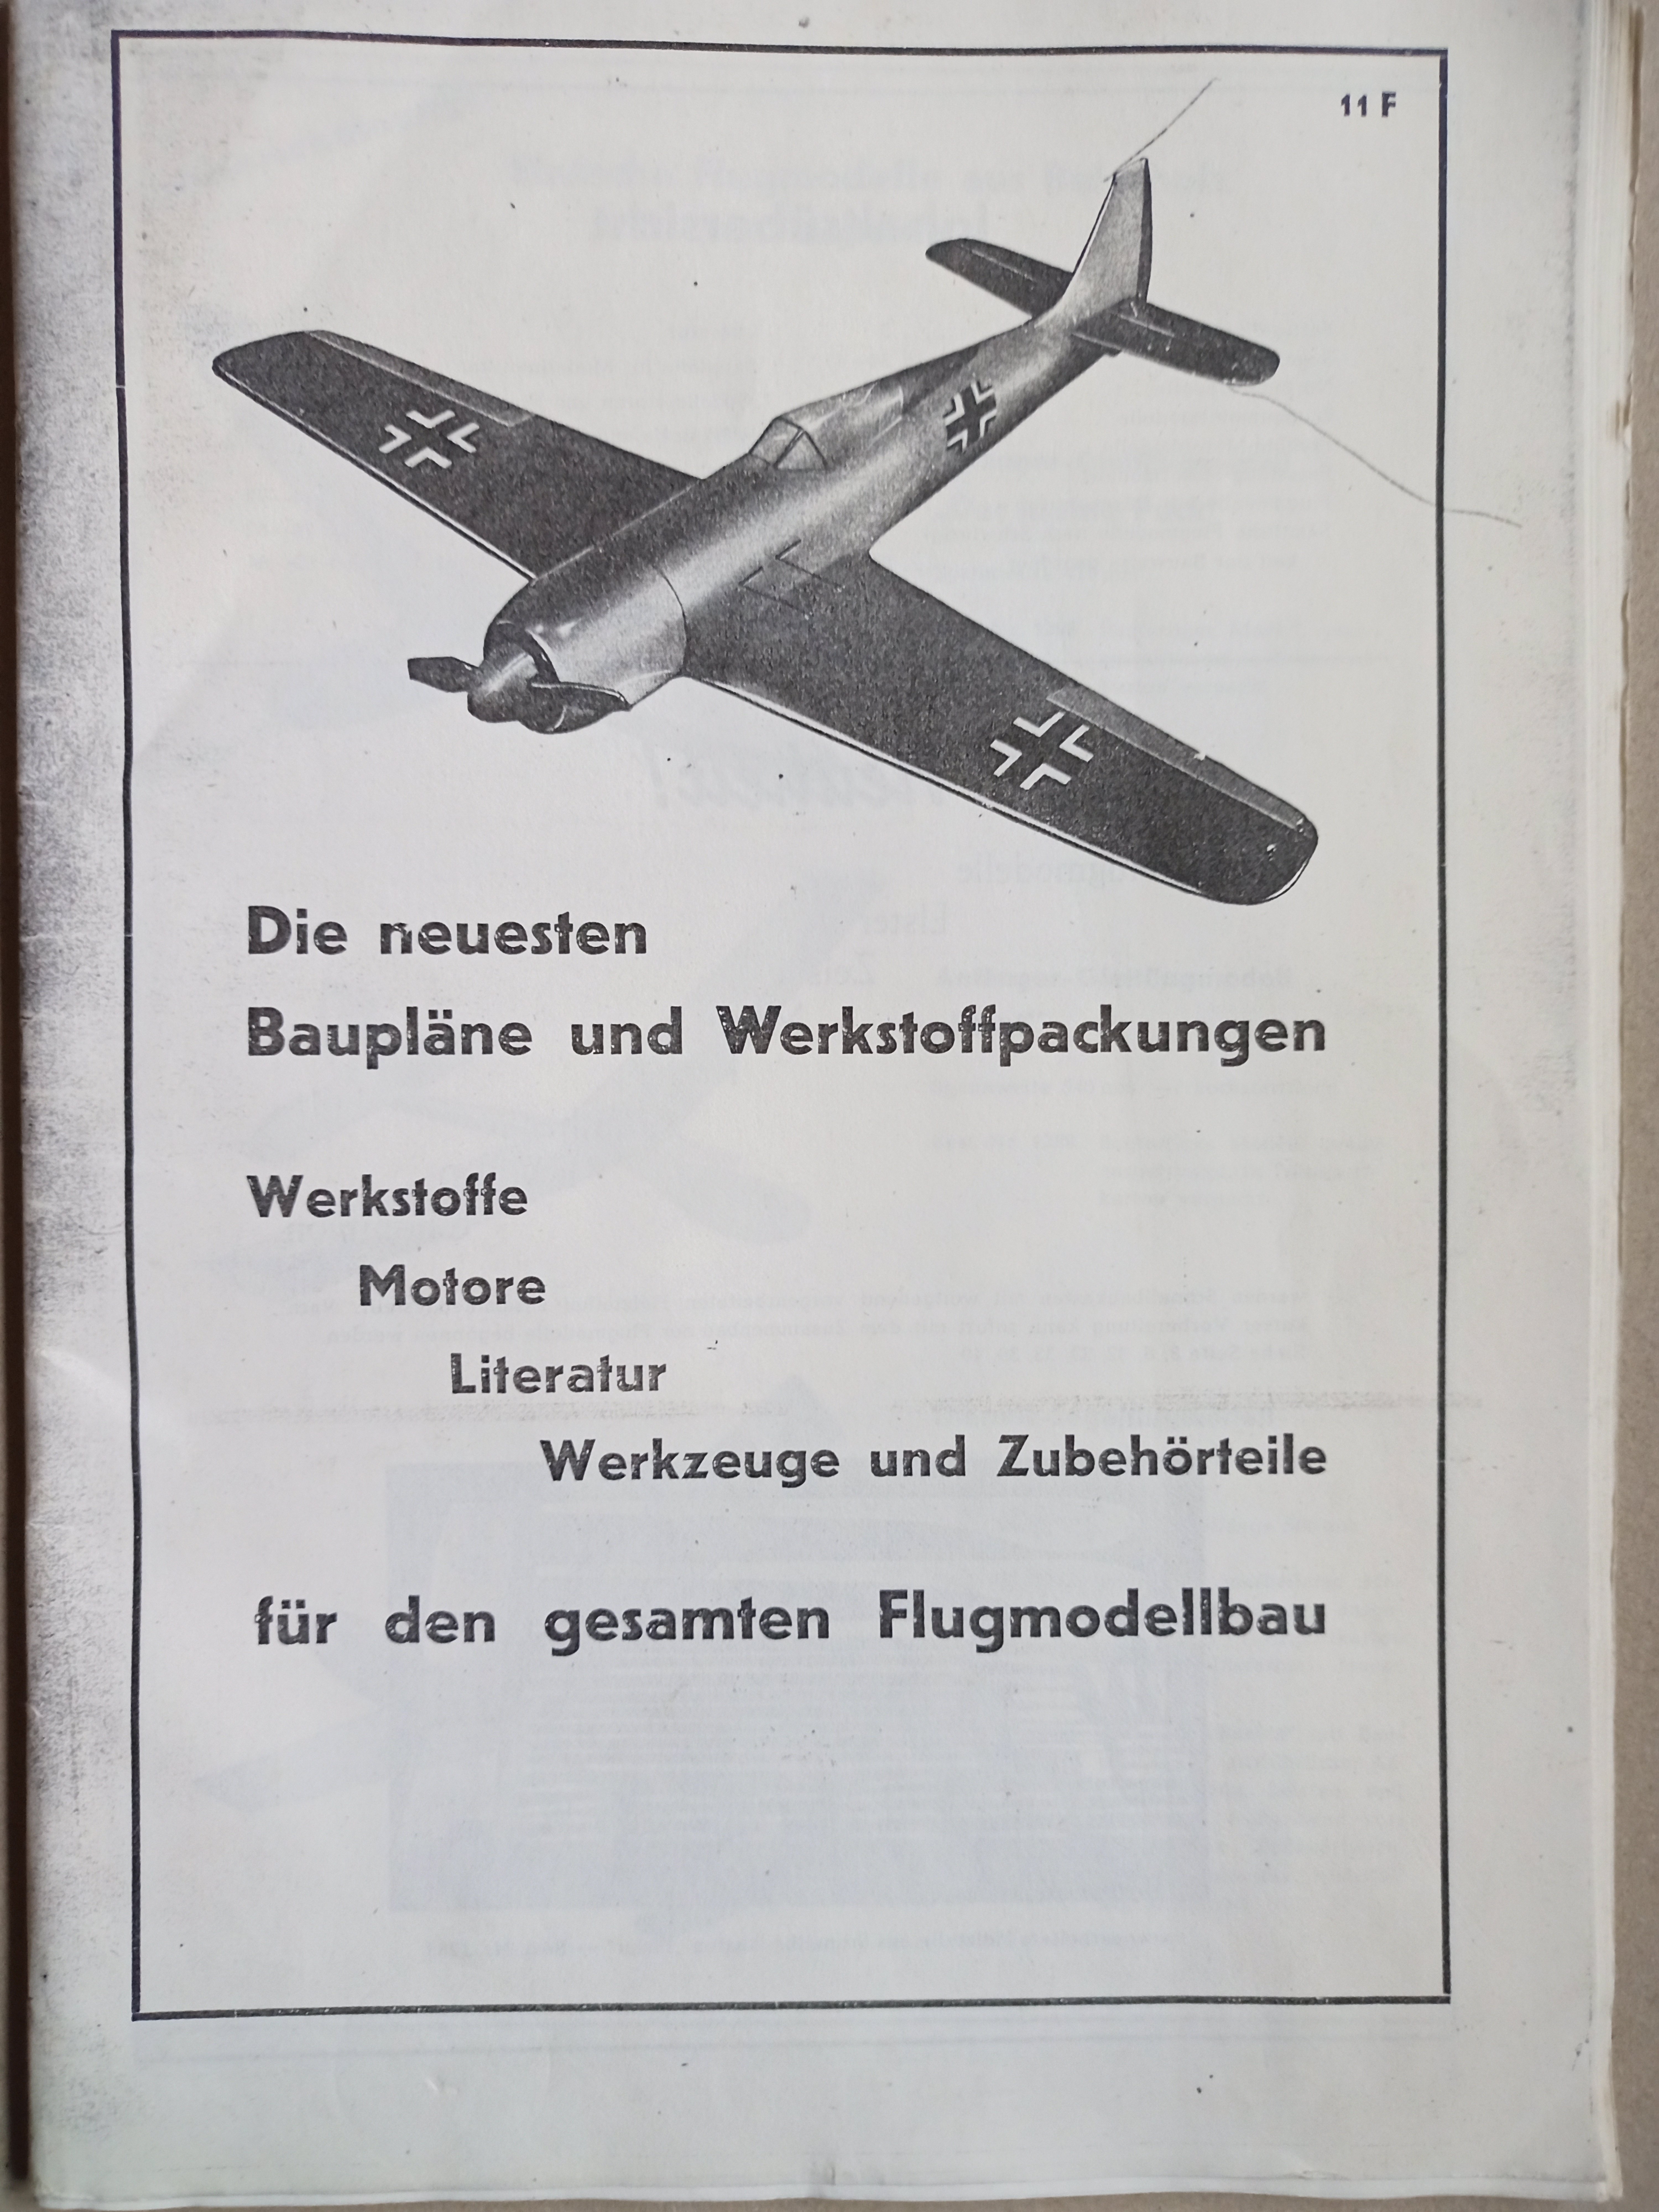 Graupner Katalog 11F (Deutsches Segelflugmuseum mit Modellflug CC BY-NC-SA)